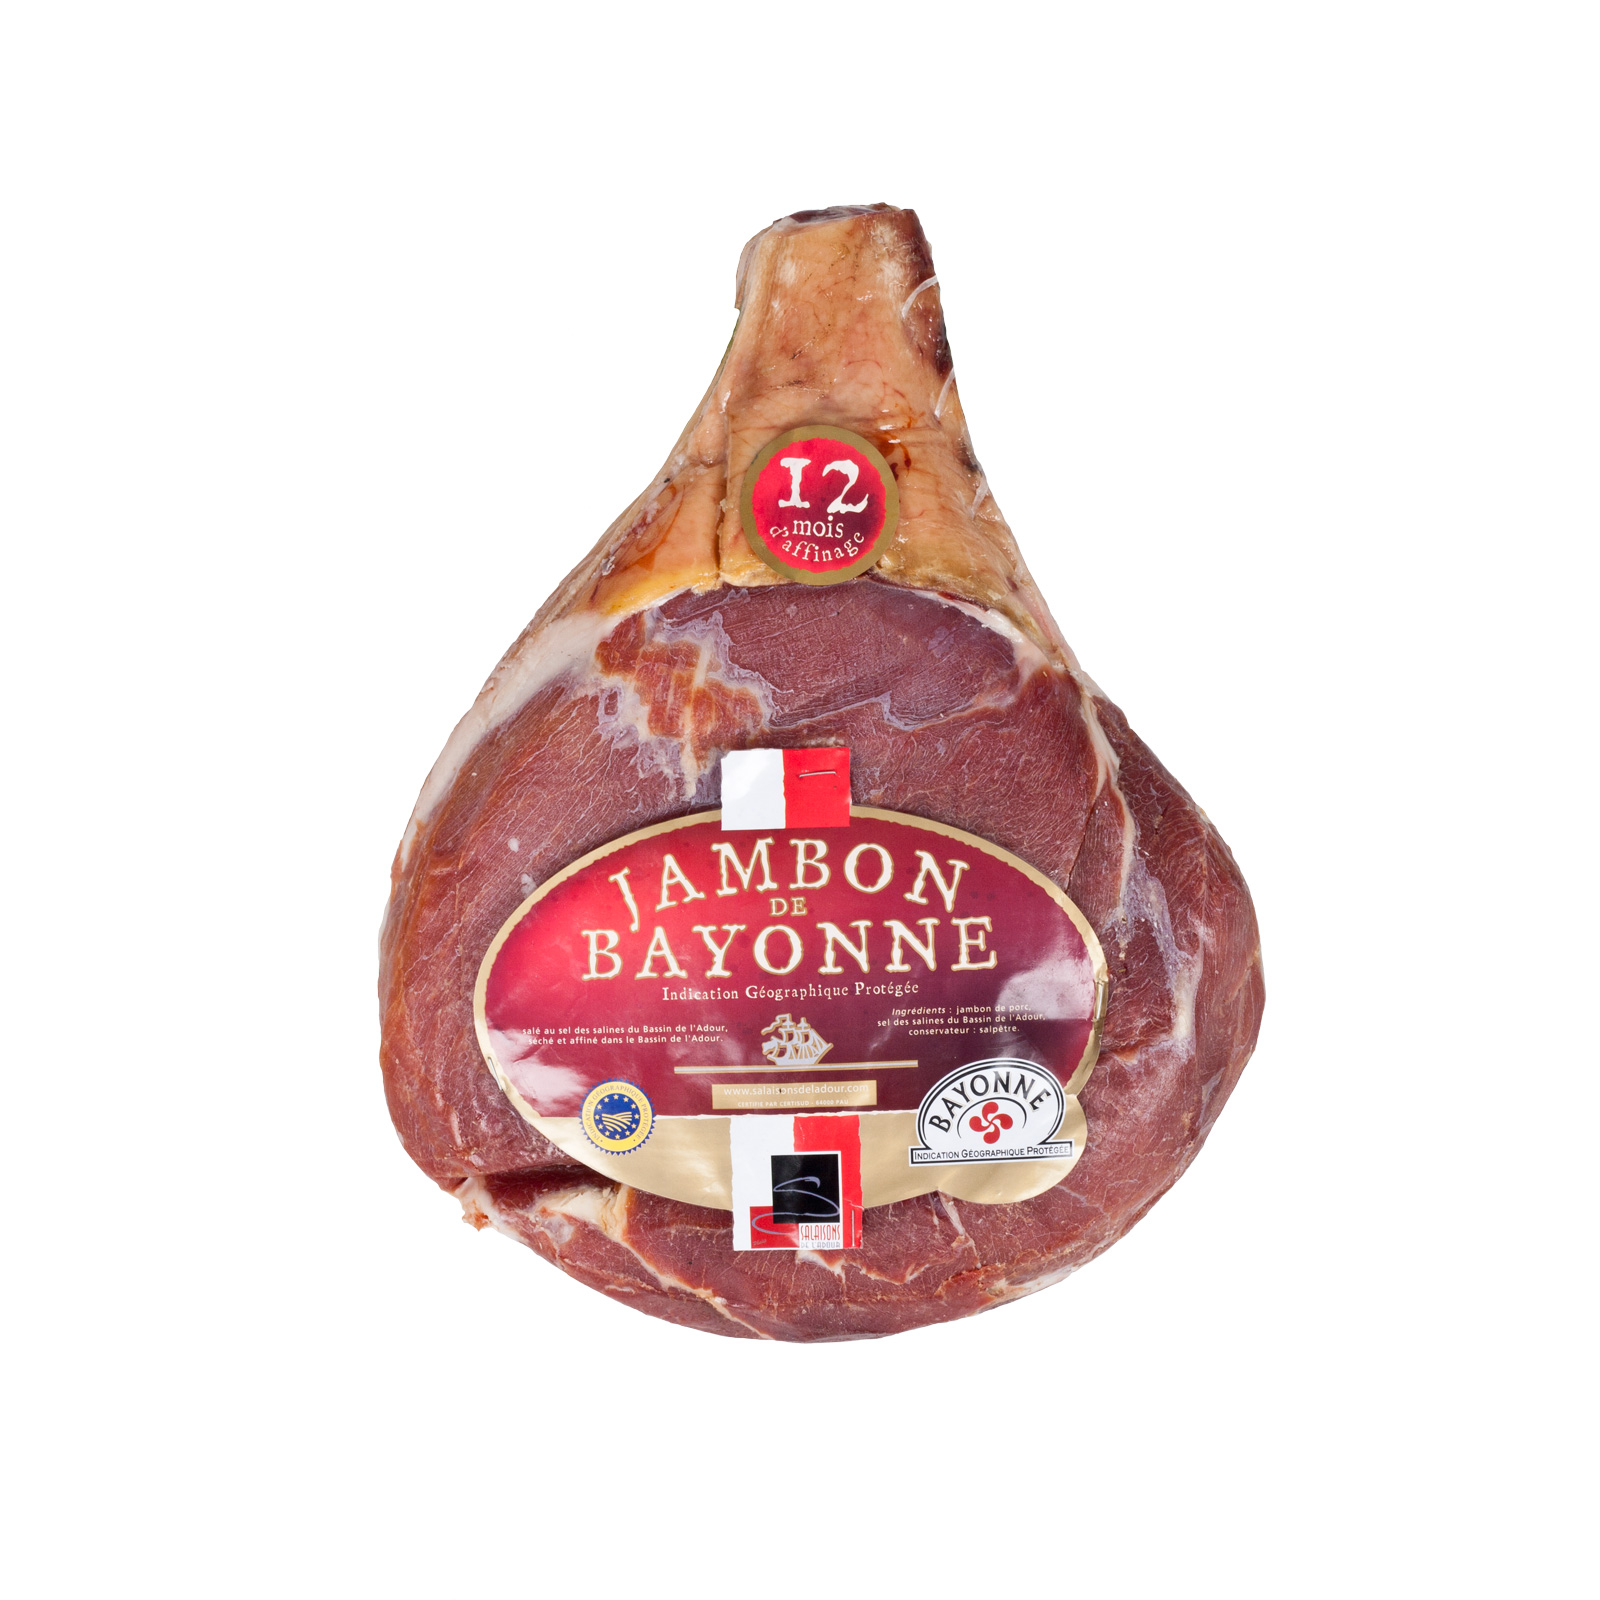 Bayonne ham uit Frankrijk